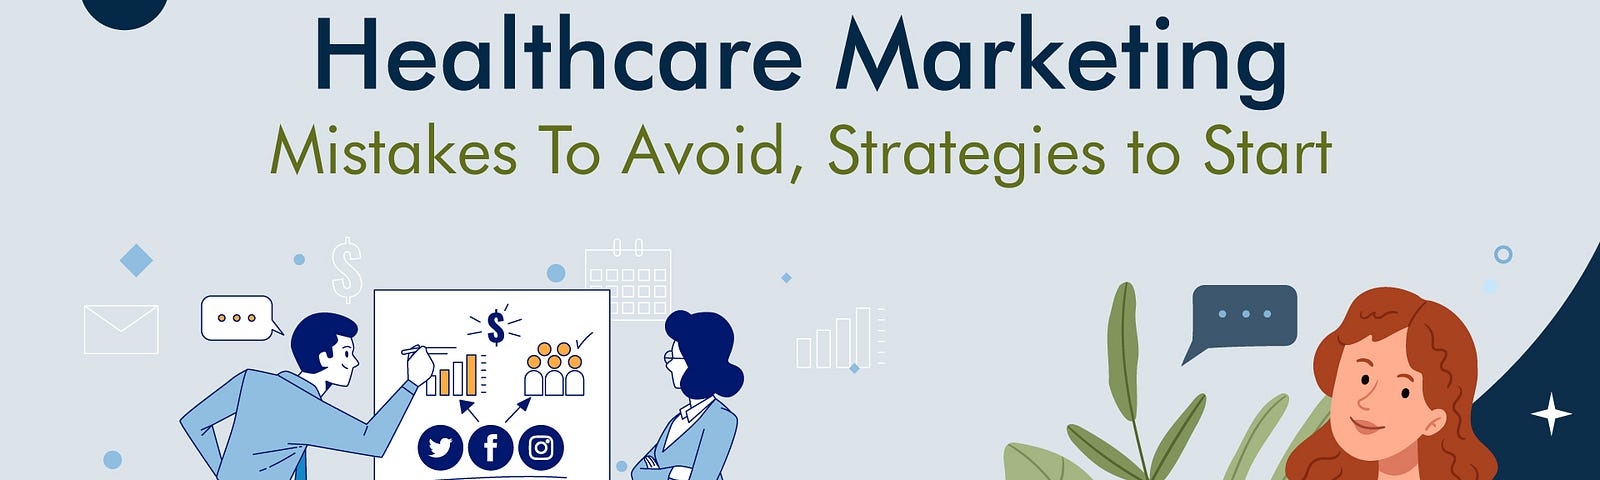 Healthcare Marketing: Mistakes To Avoid, Strategies to Start